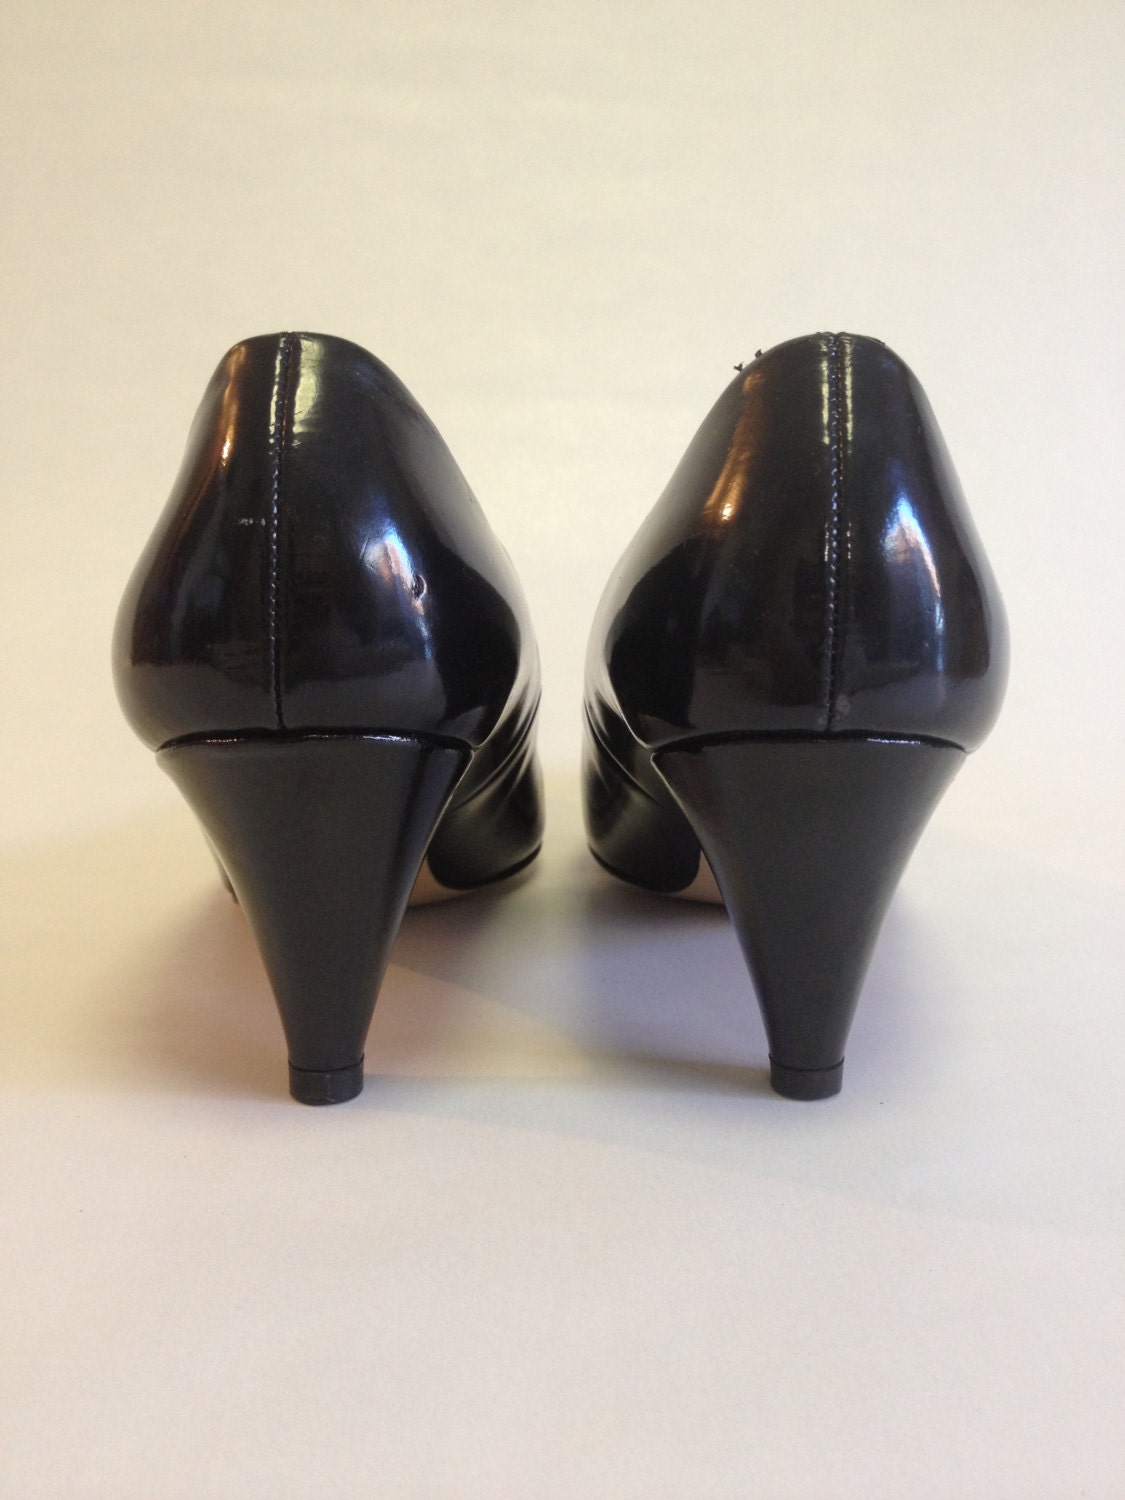 Vintage Red Cross Shoes Black Patent Leather Heels Pumps Size